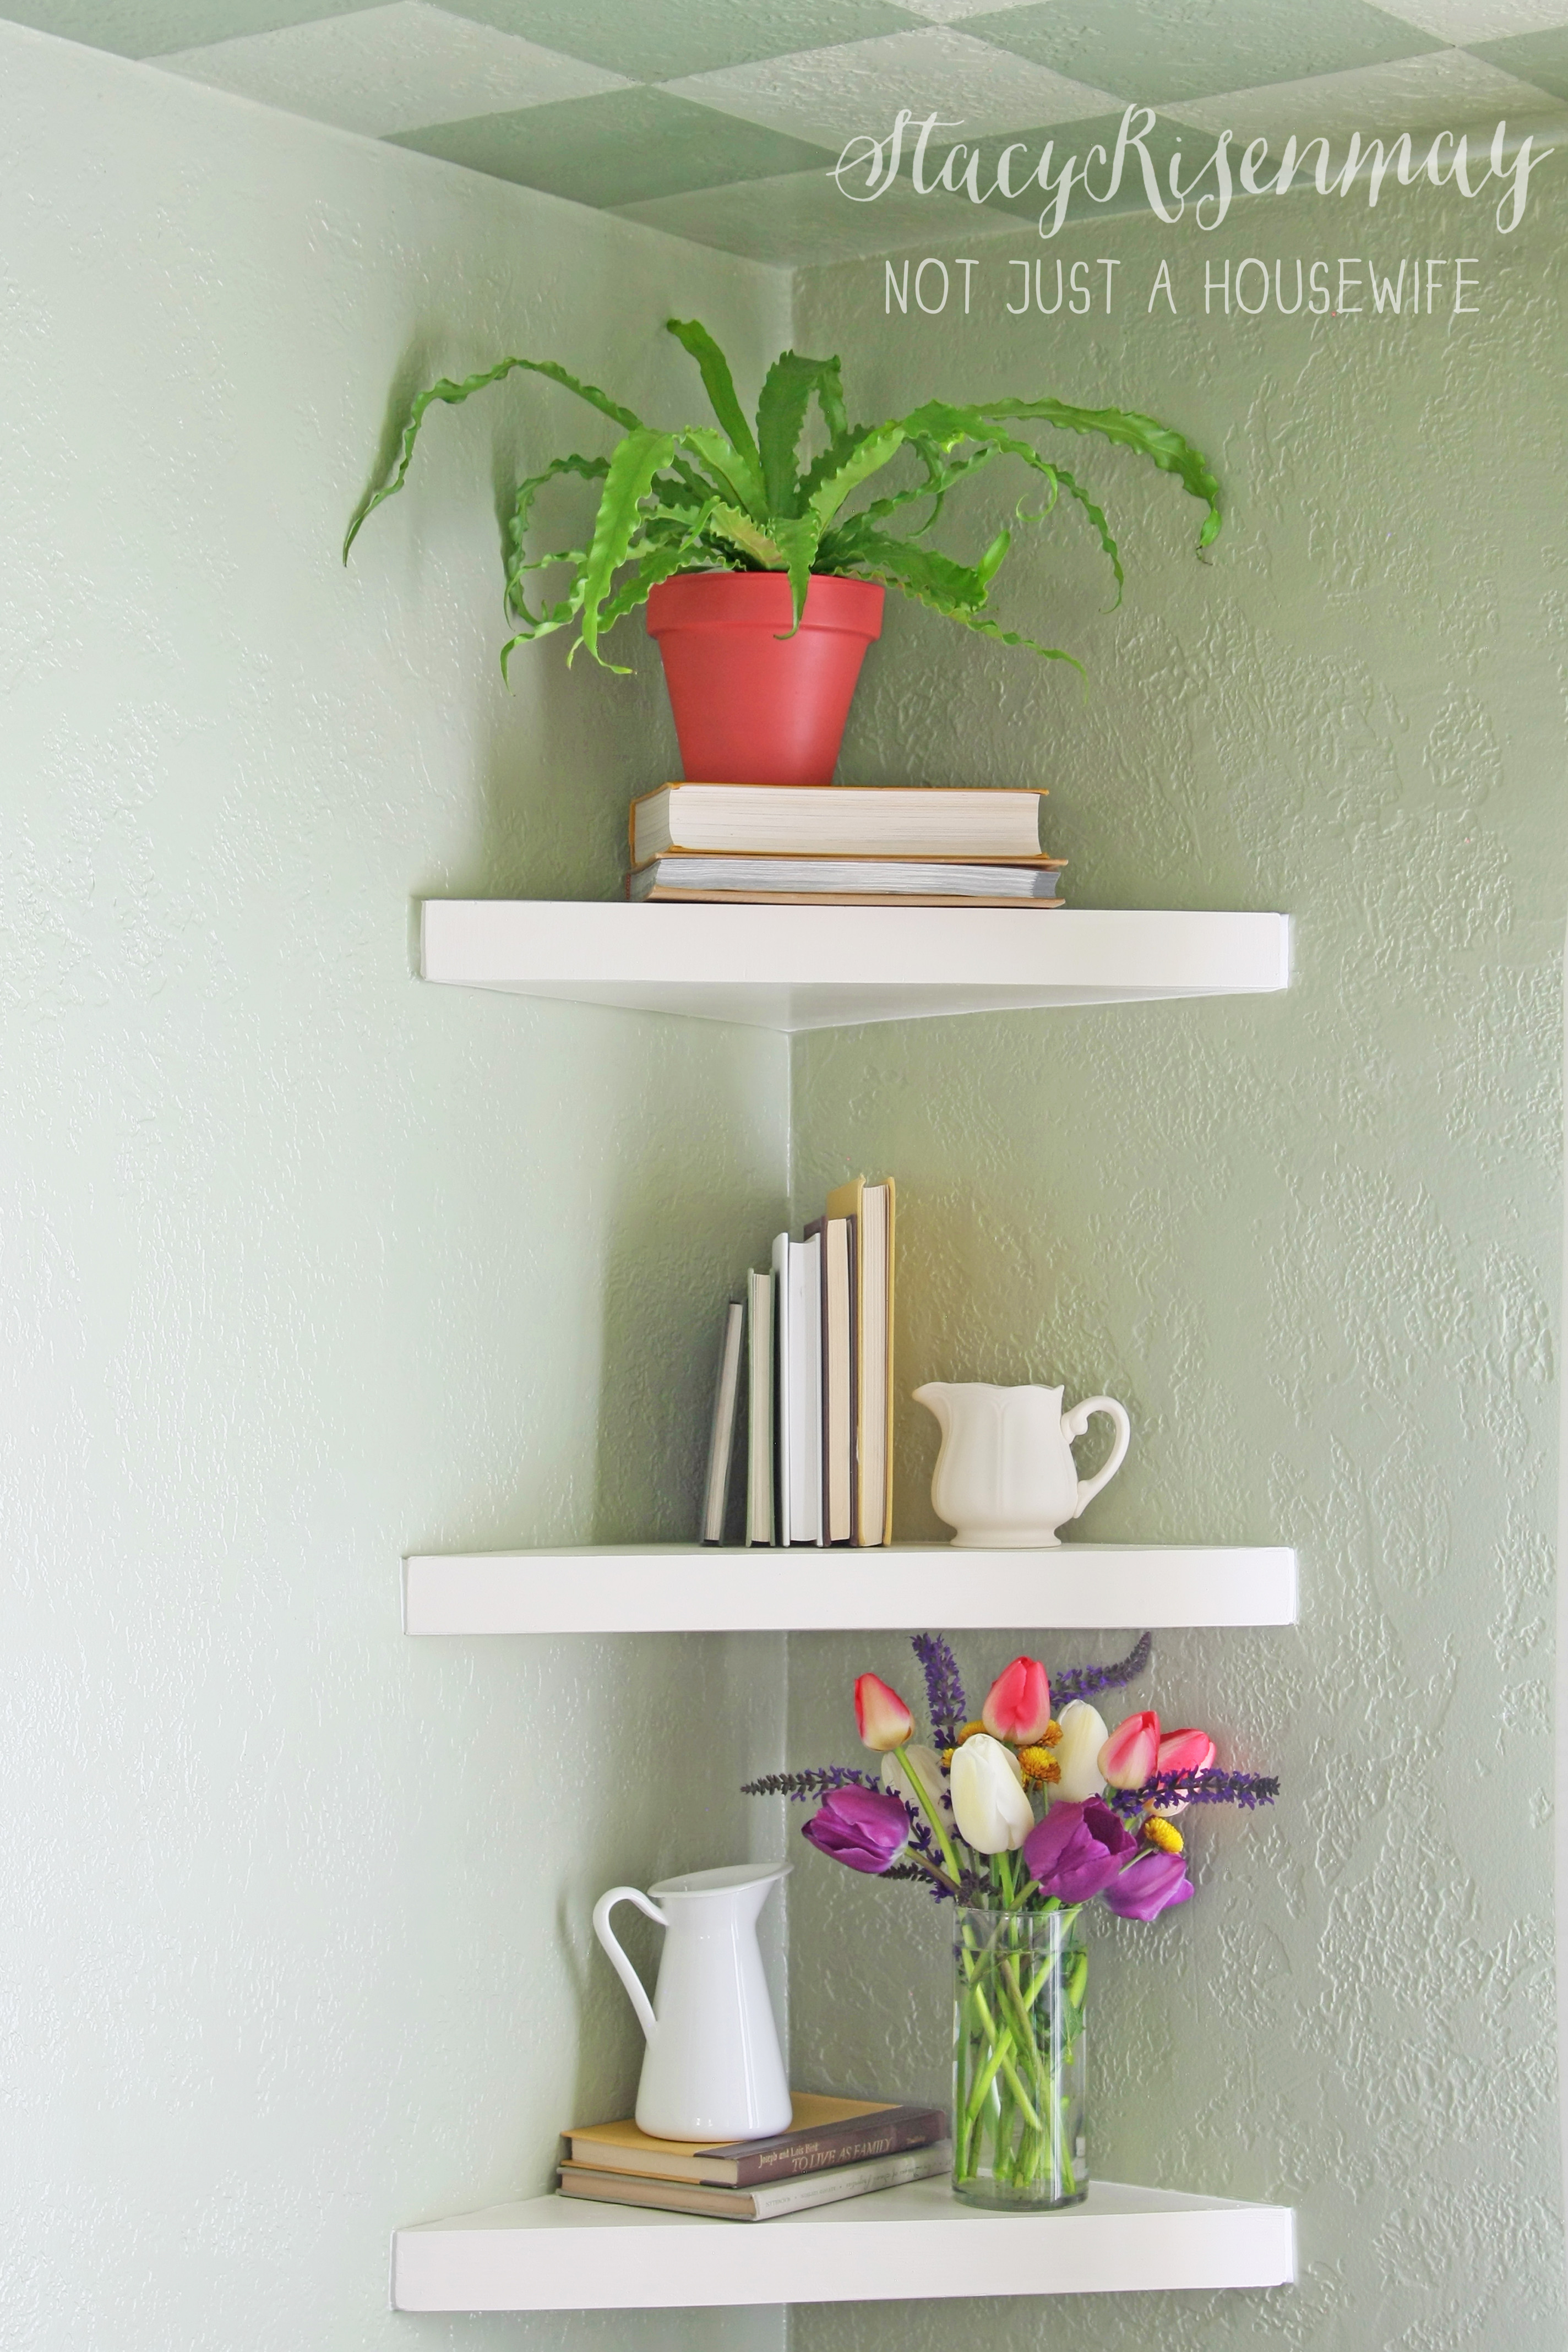 Best ideas about DIY Corner Shelf
. Save or Pin Floating Corner Shelves Now.